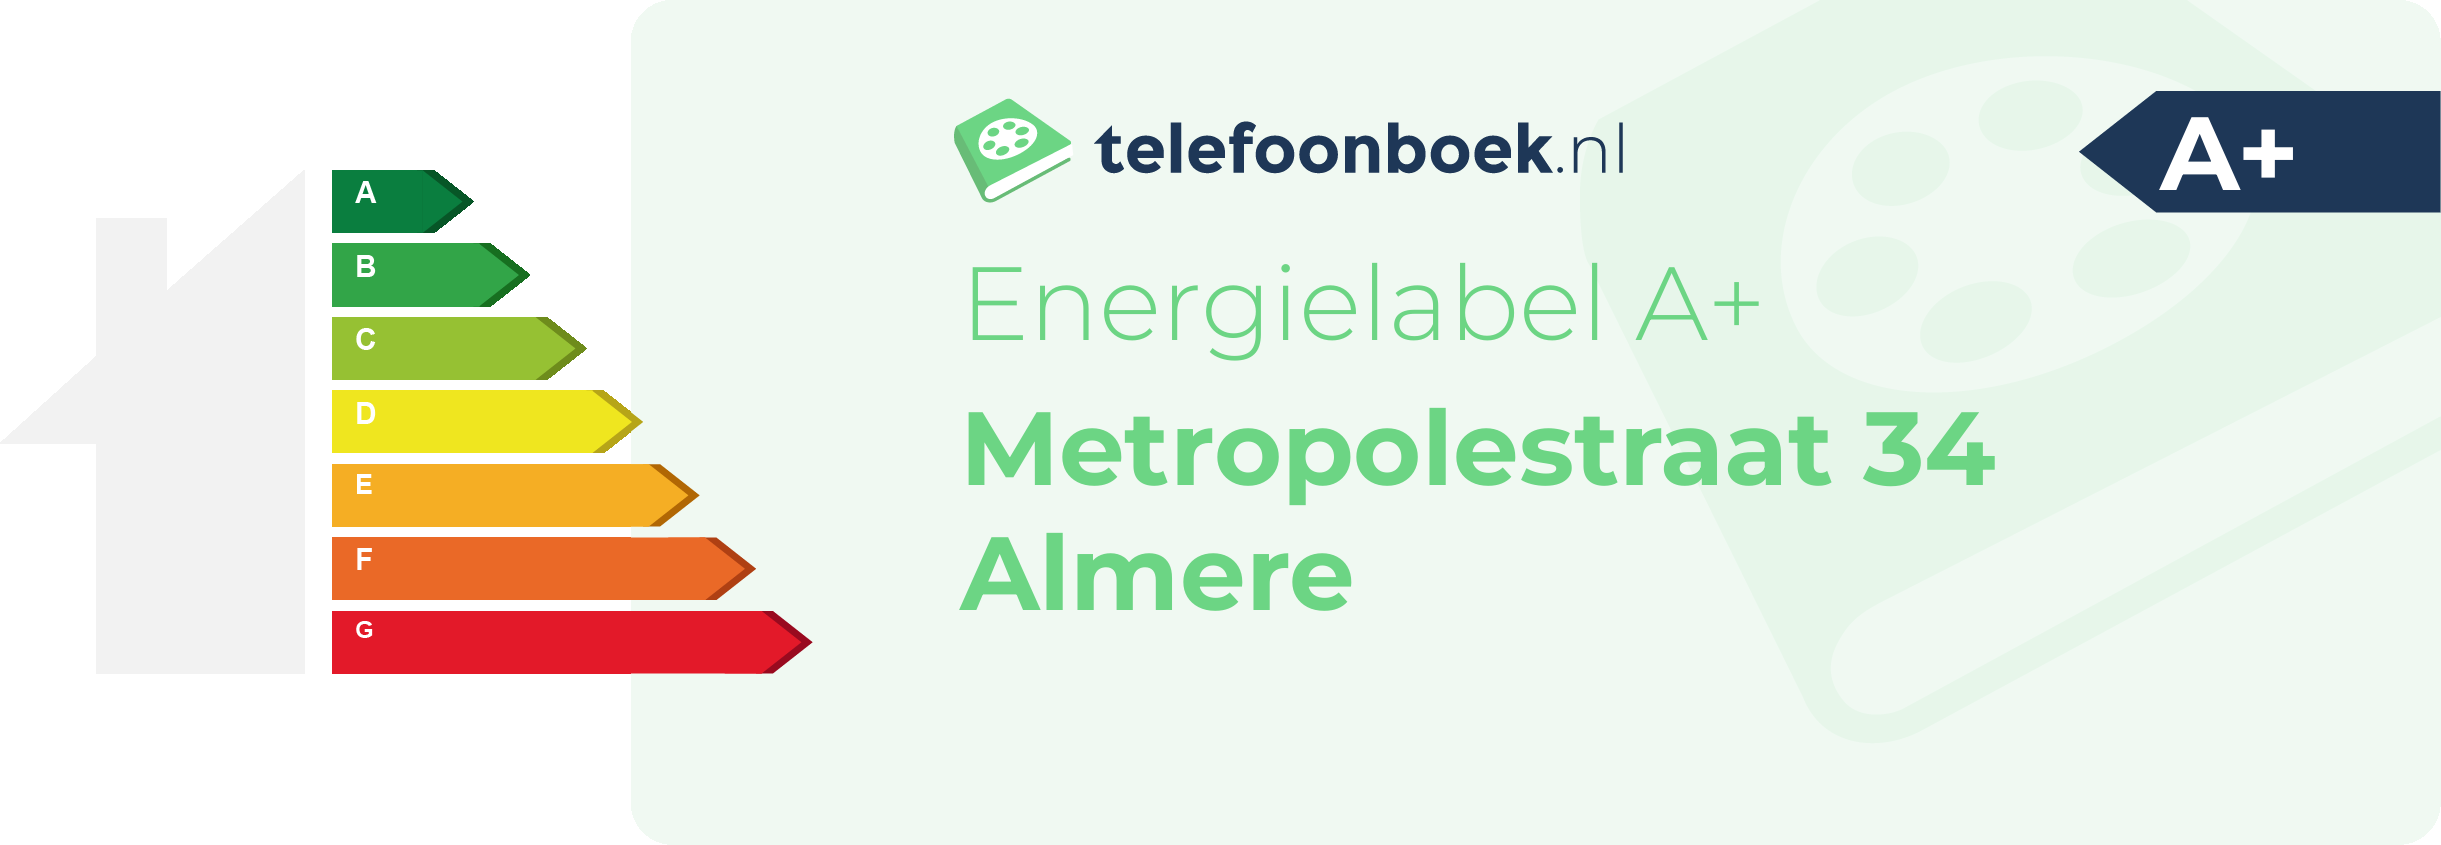 Energielabel Metropolestraat 34 Almere